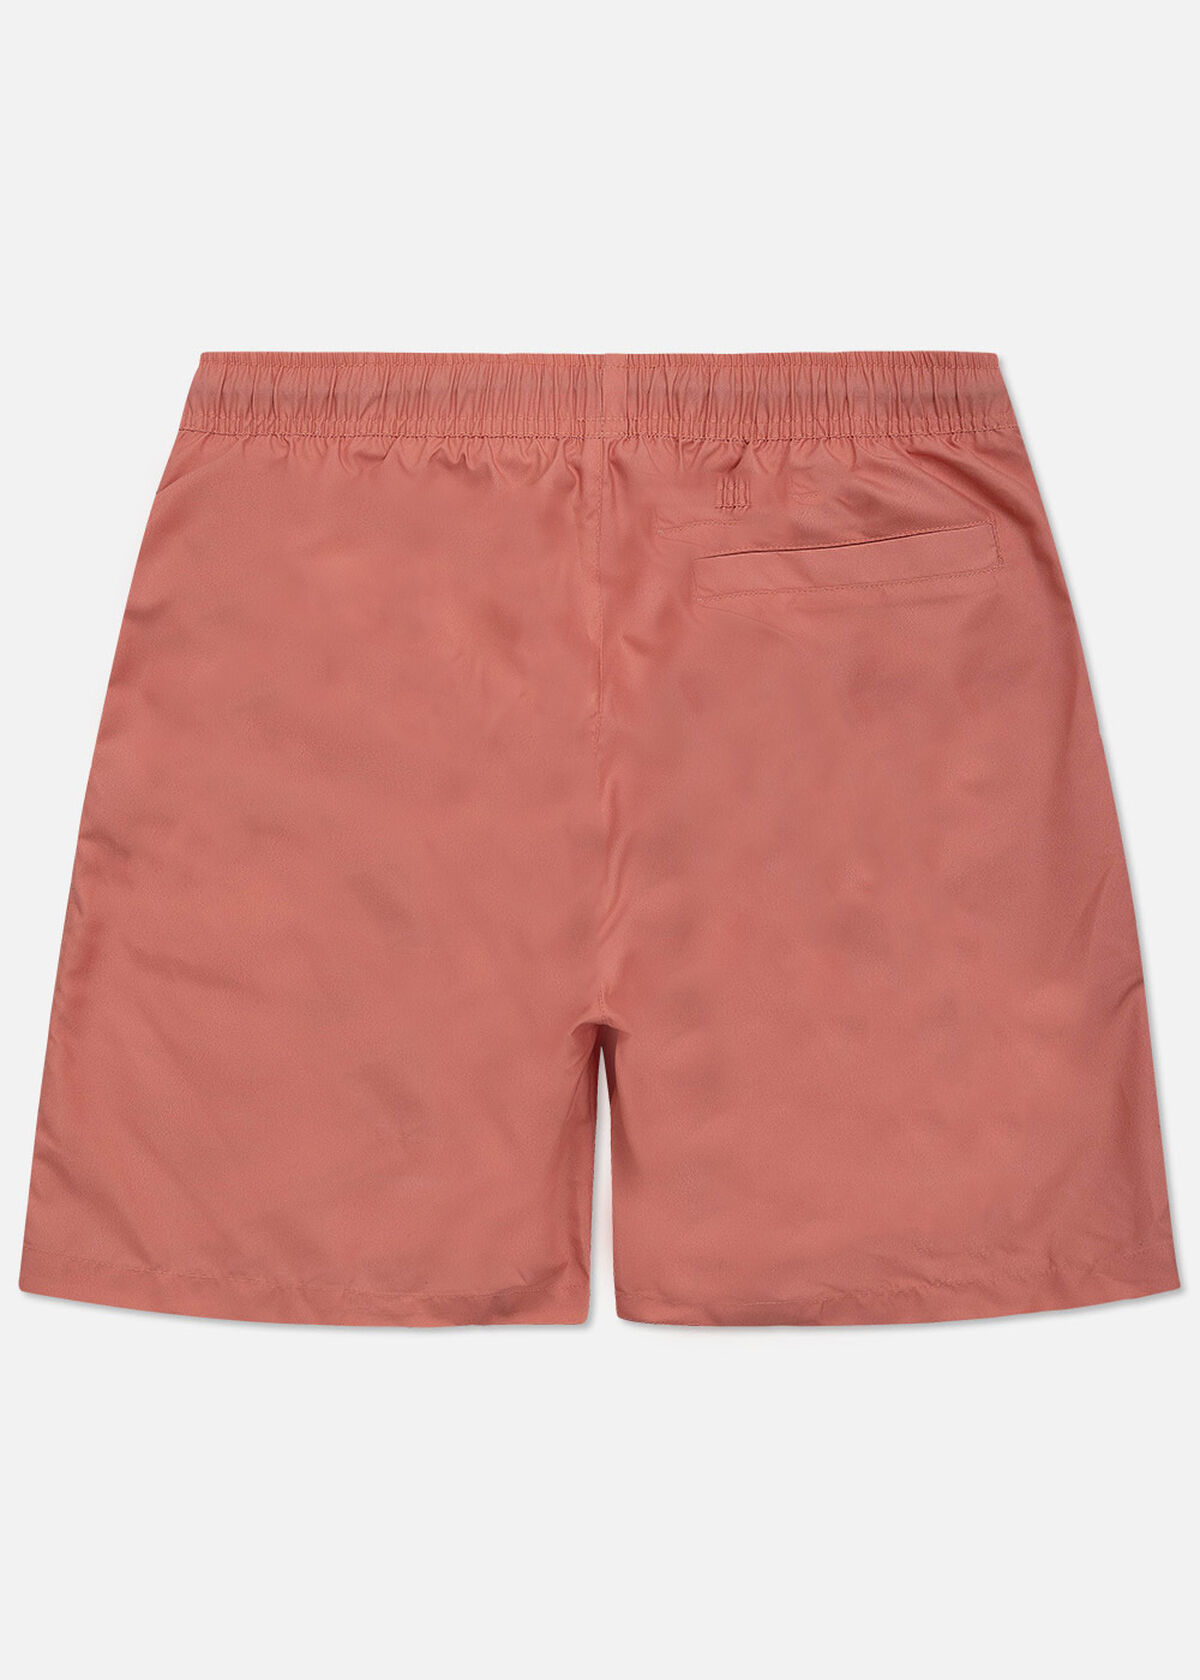 Swim Shorts - 100% Polyester, Peach, hi-res